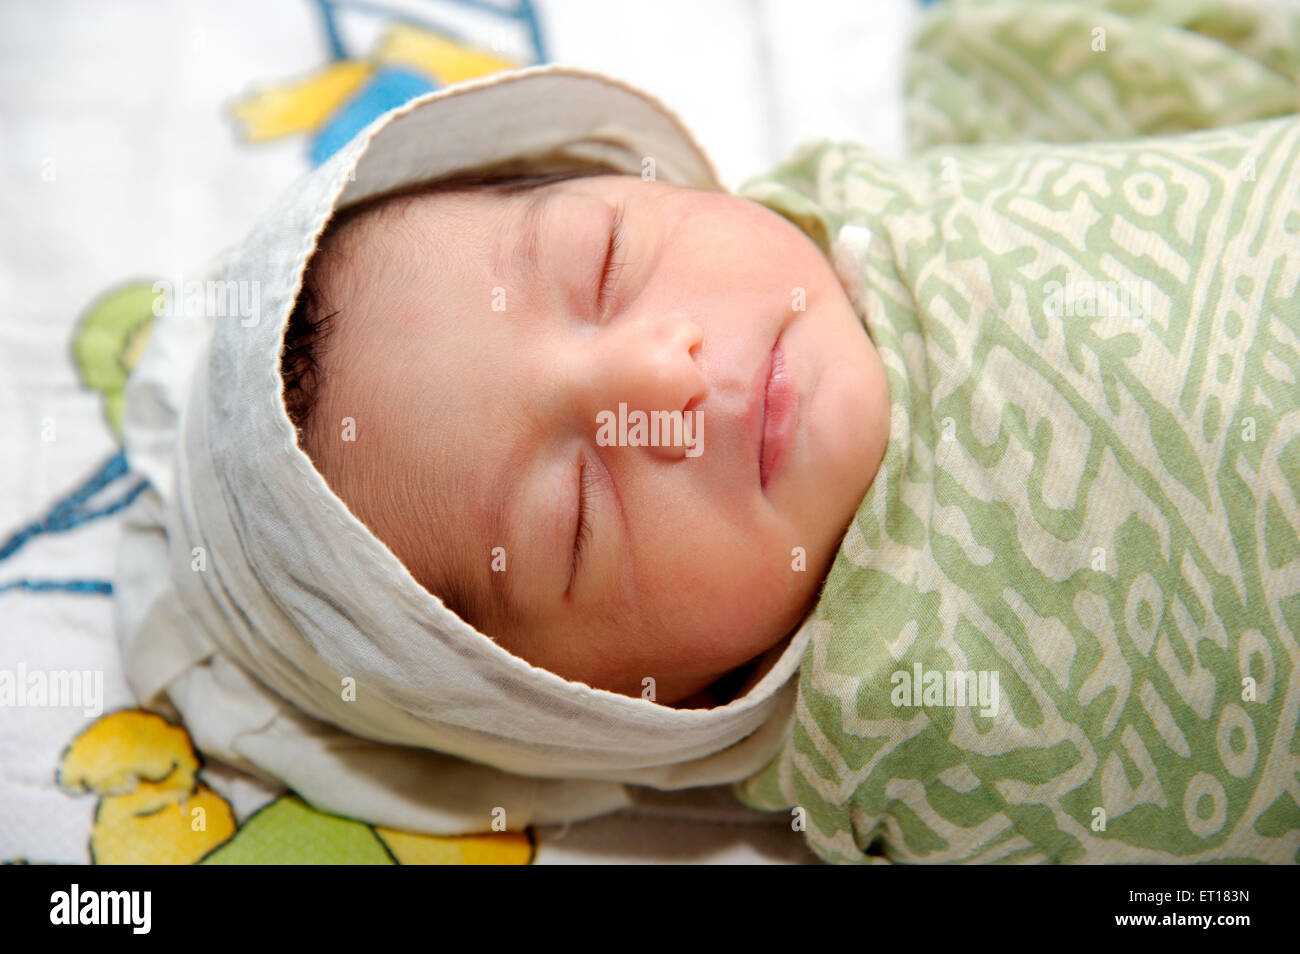 Newborn baby sleeping wrapped printed fabric - Model Released # 736LA - rmm 179664 Stock Photo